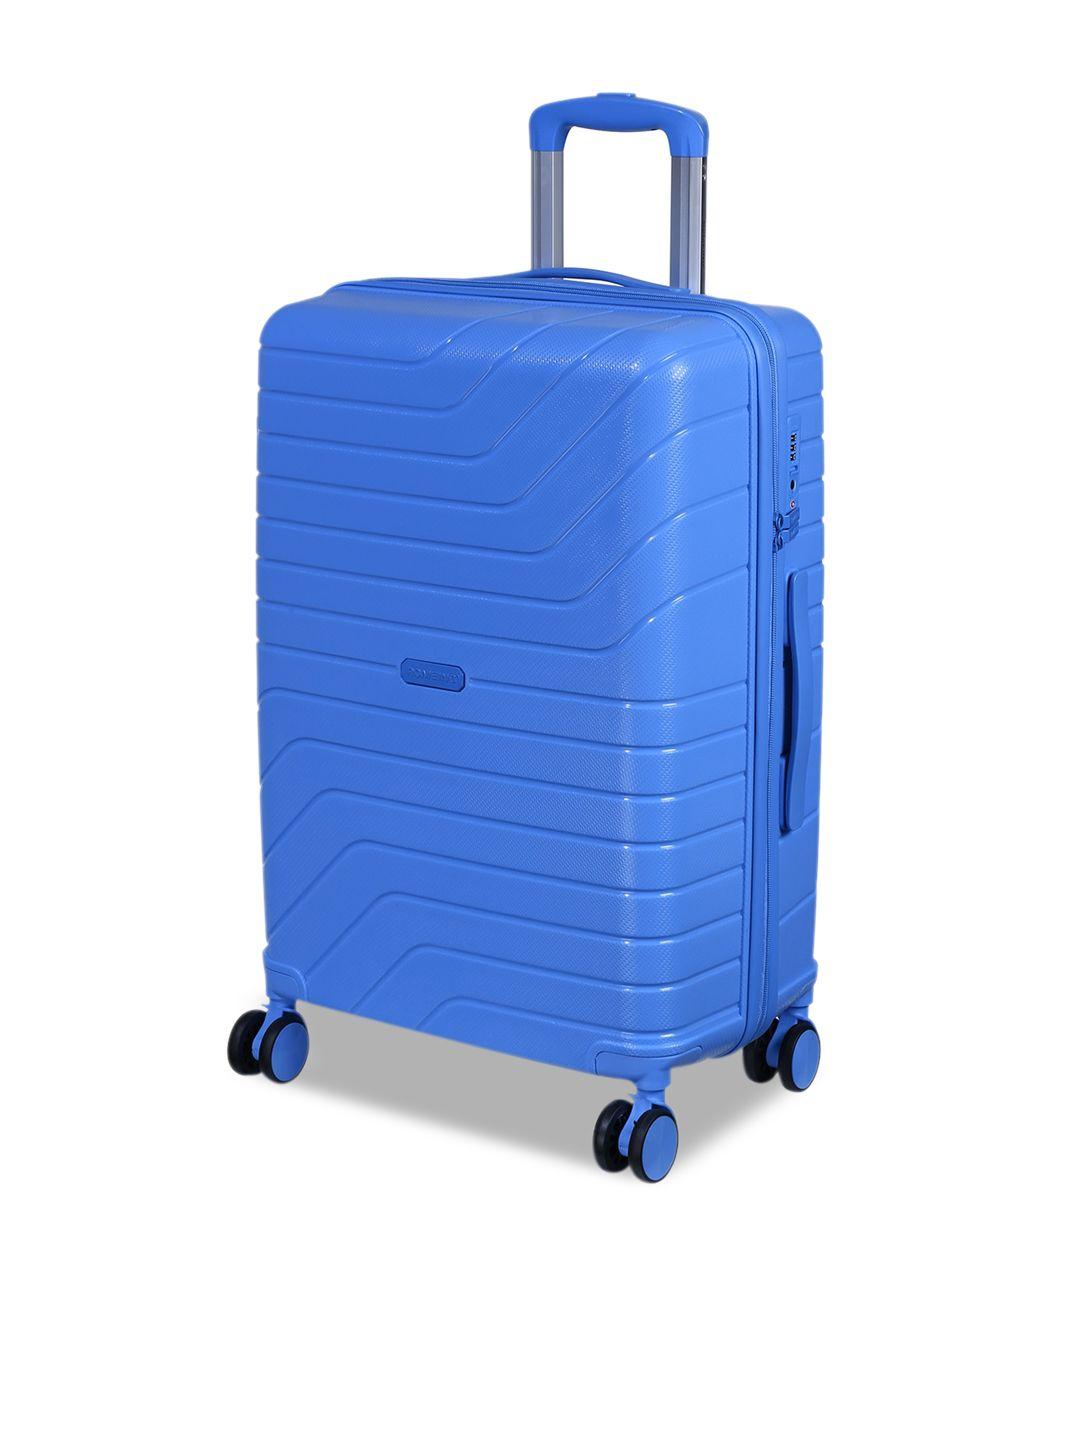 romeing tuscany blue textured hard-sided medium polypropylene trolley suitcase